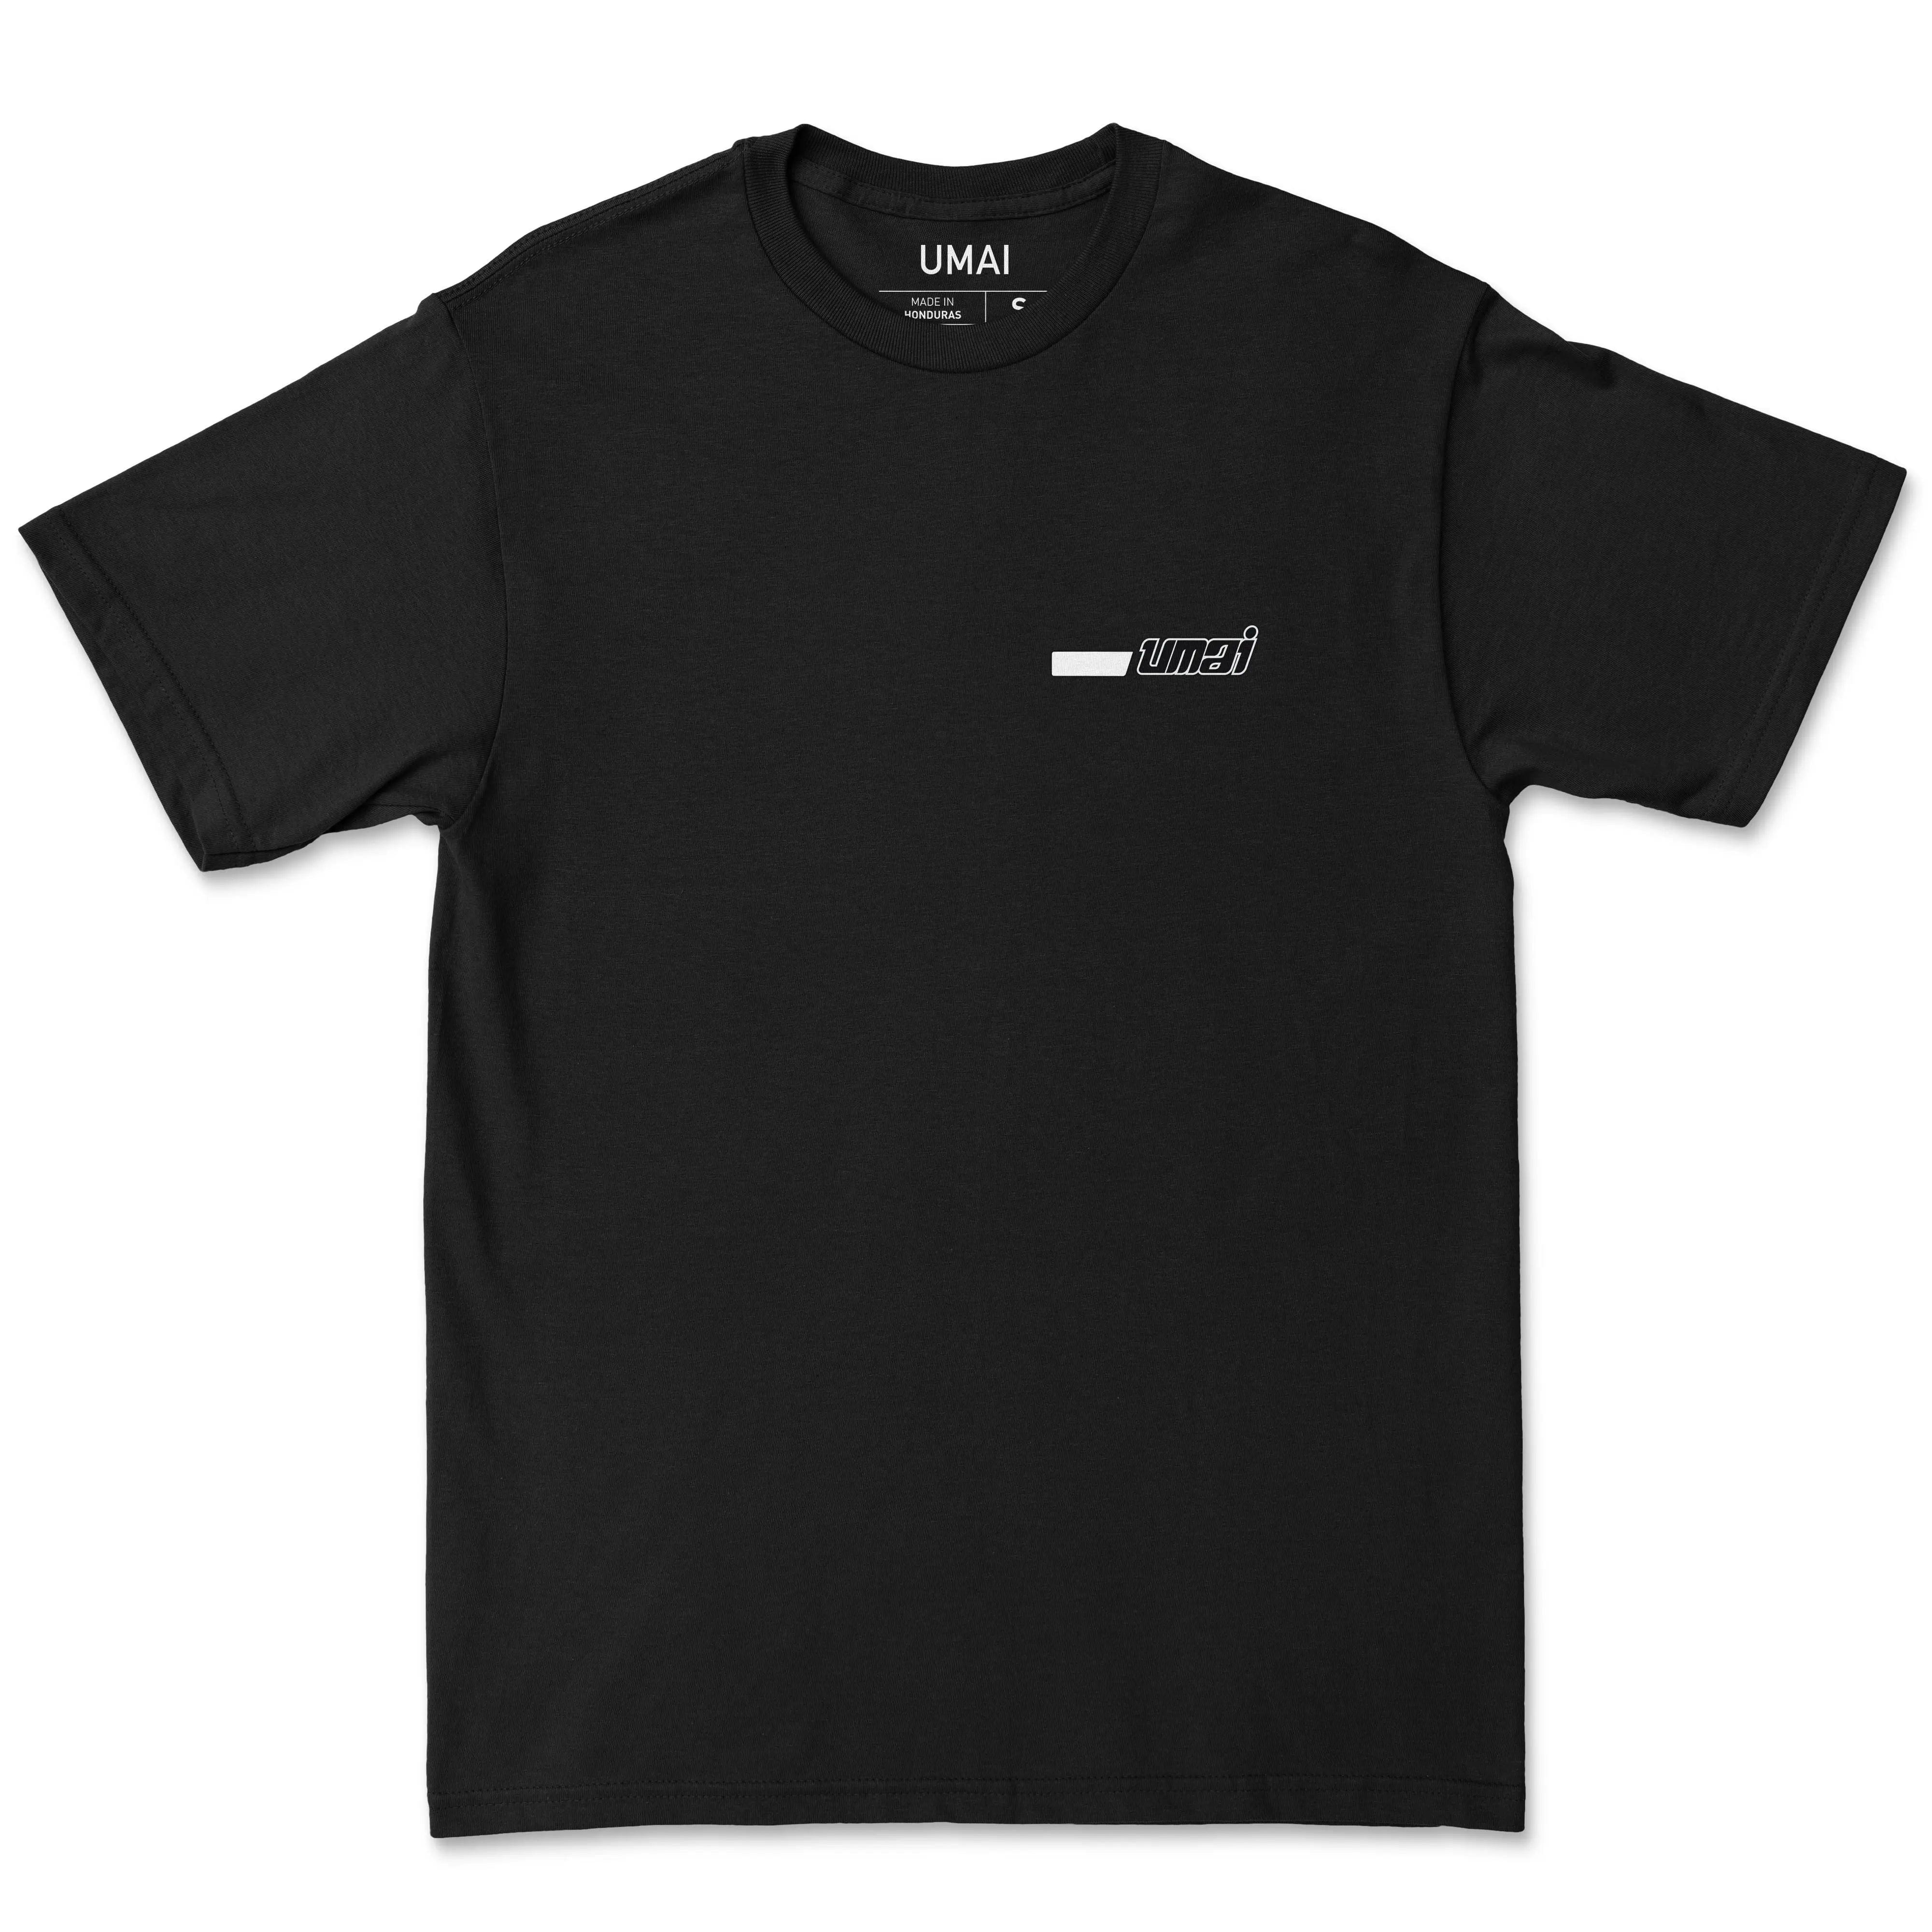 Eclipse • Camiseta [Exclusivo Semanal]